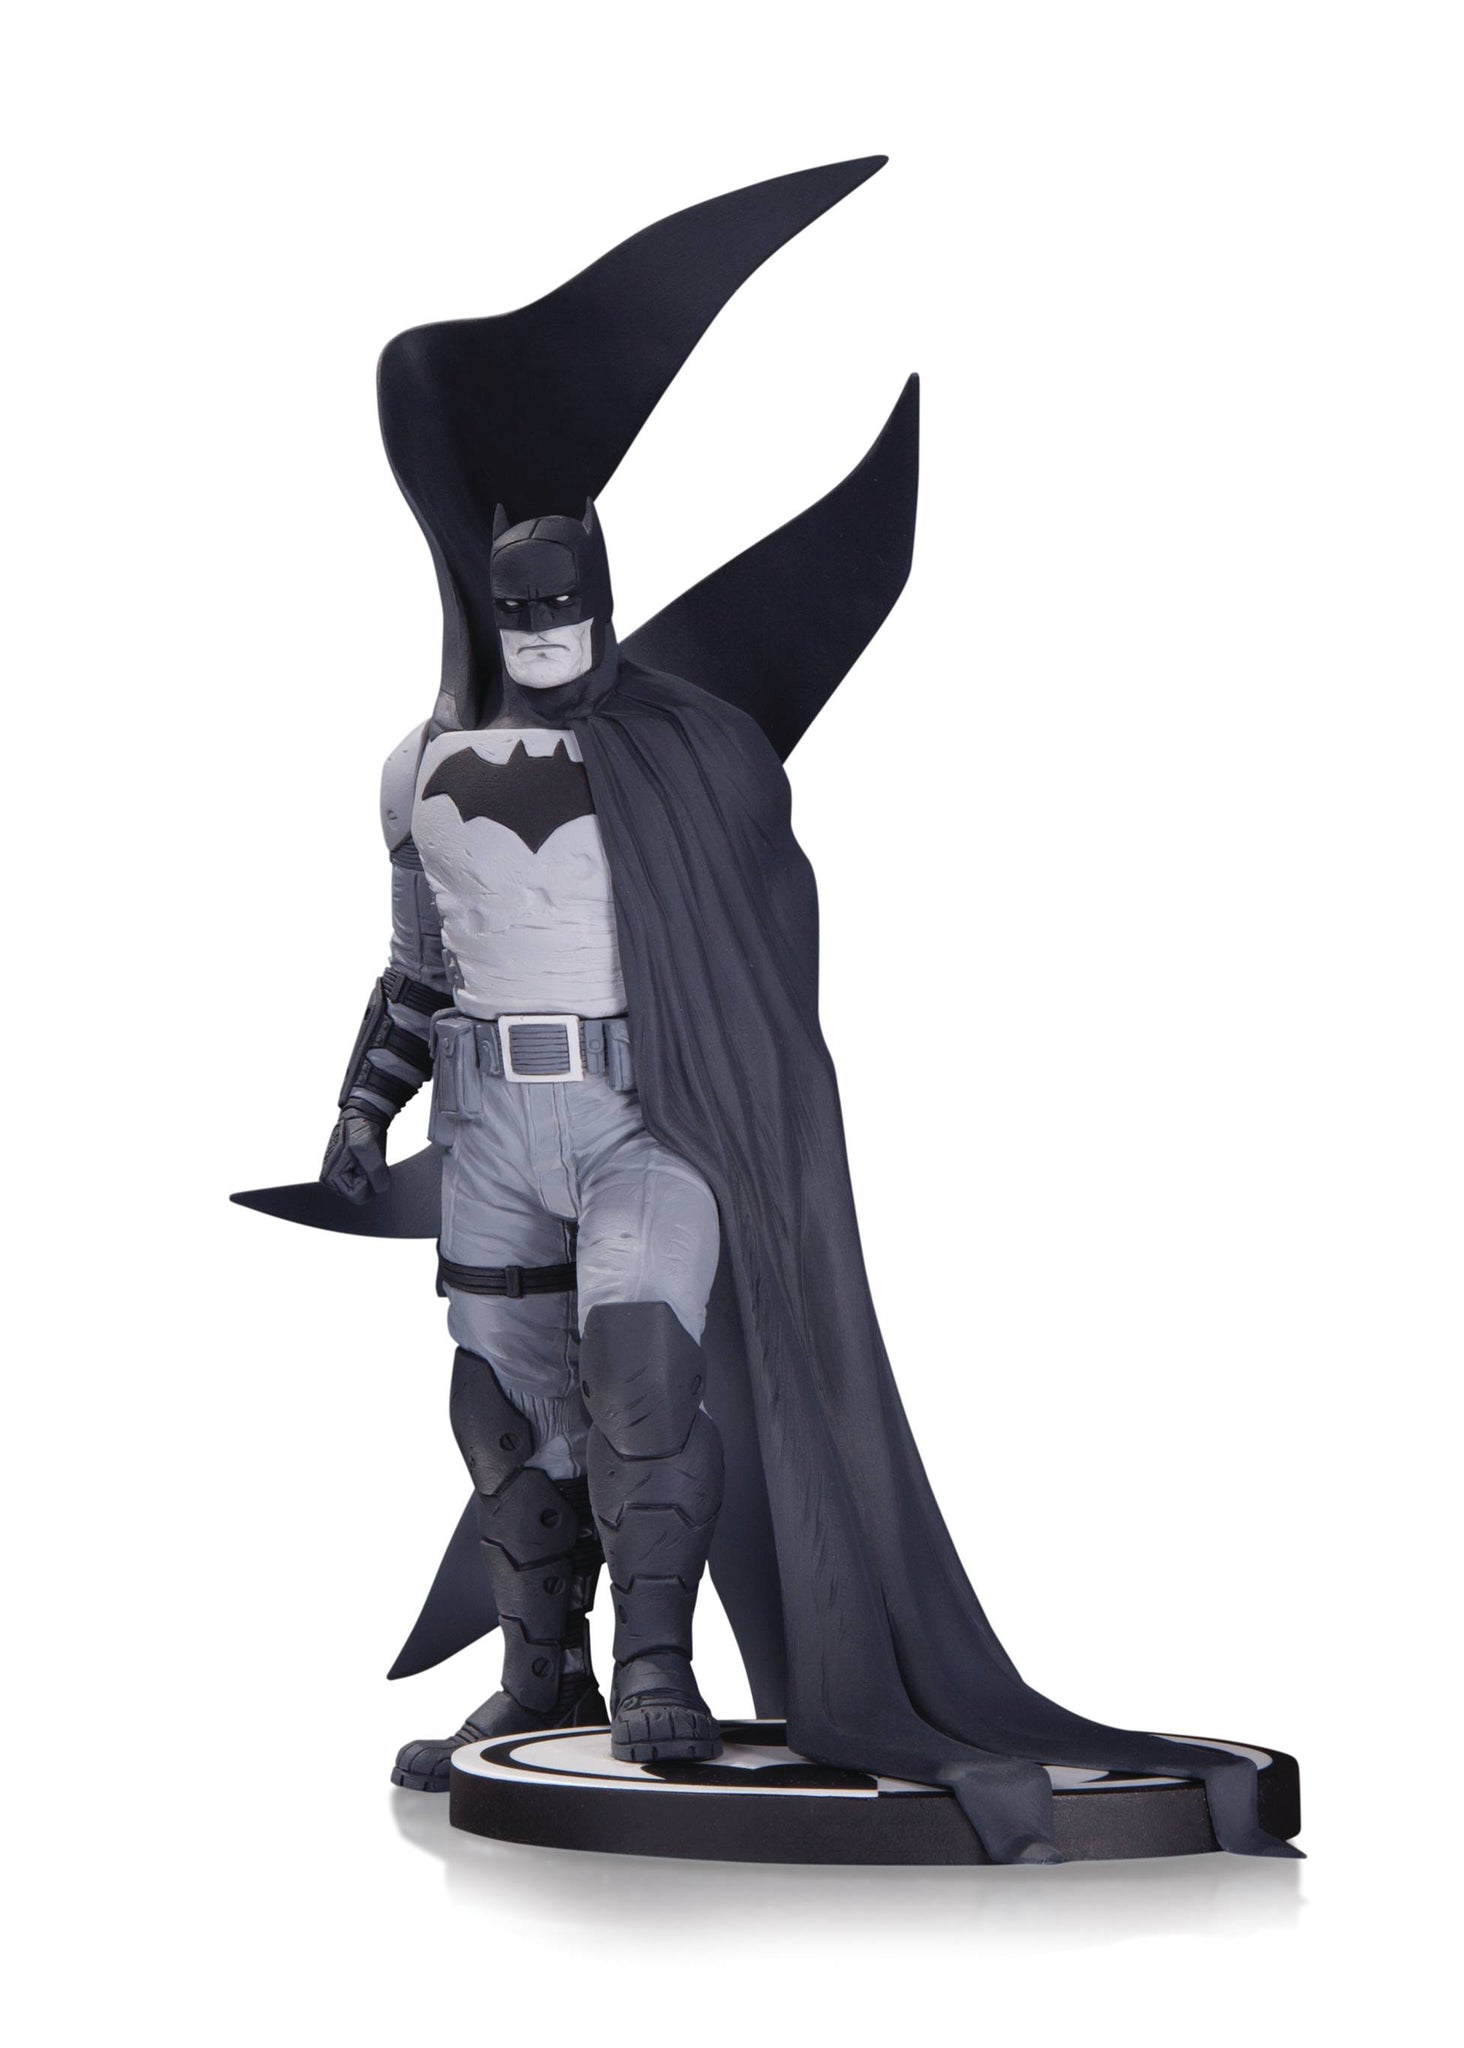 Batman Black and White Statue Designed By Raphael Albuquerque